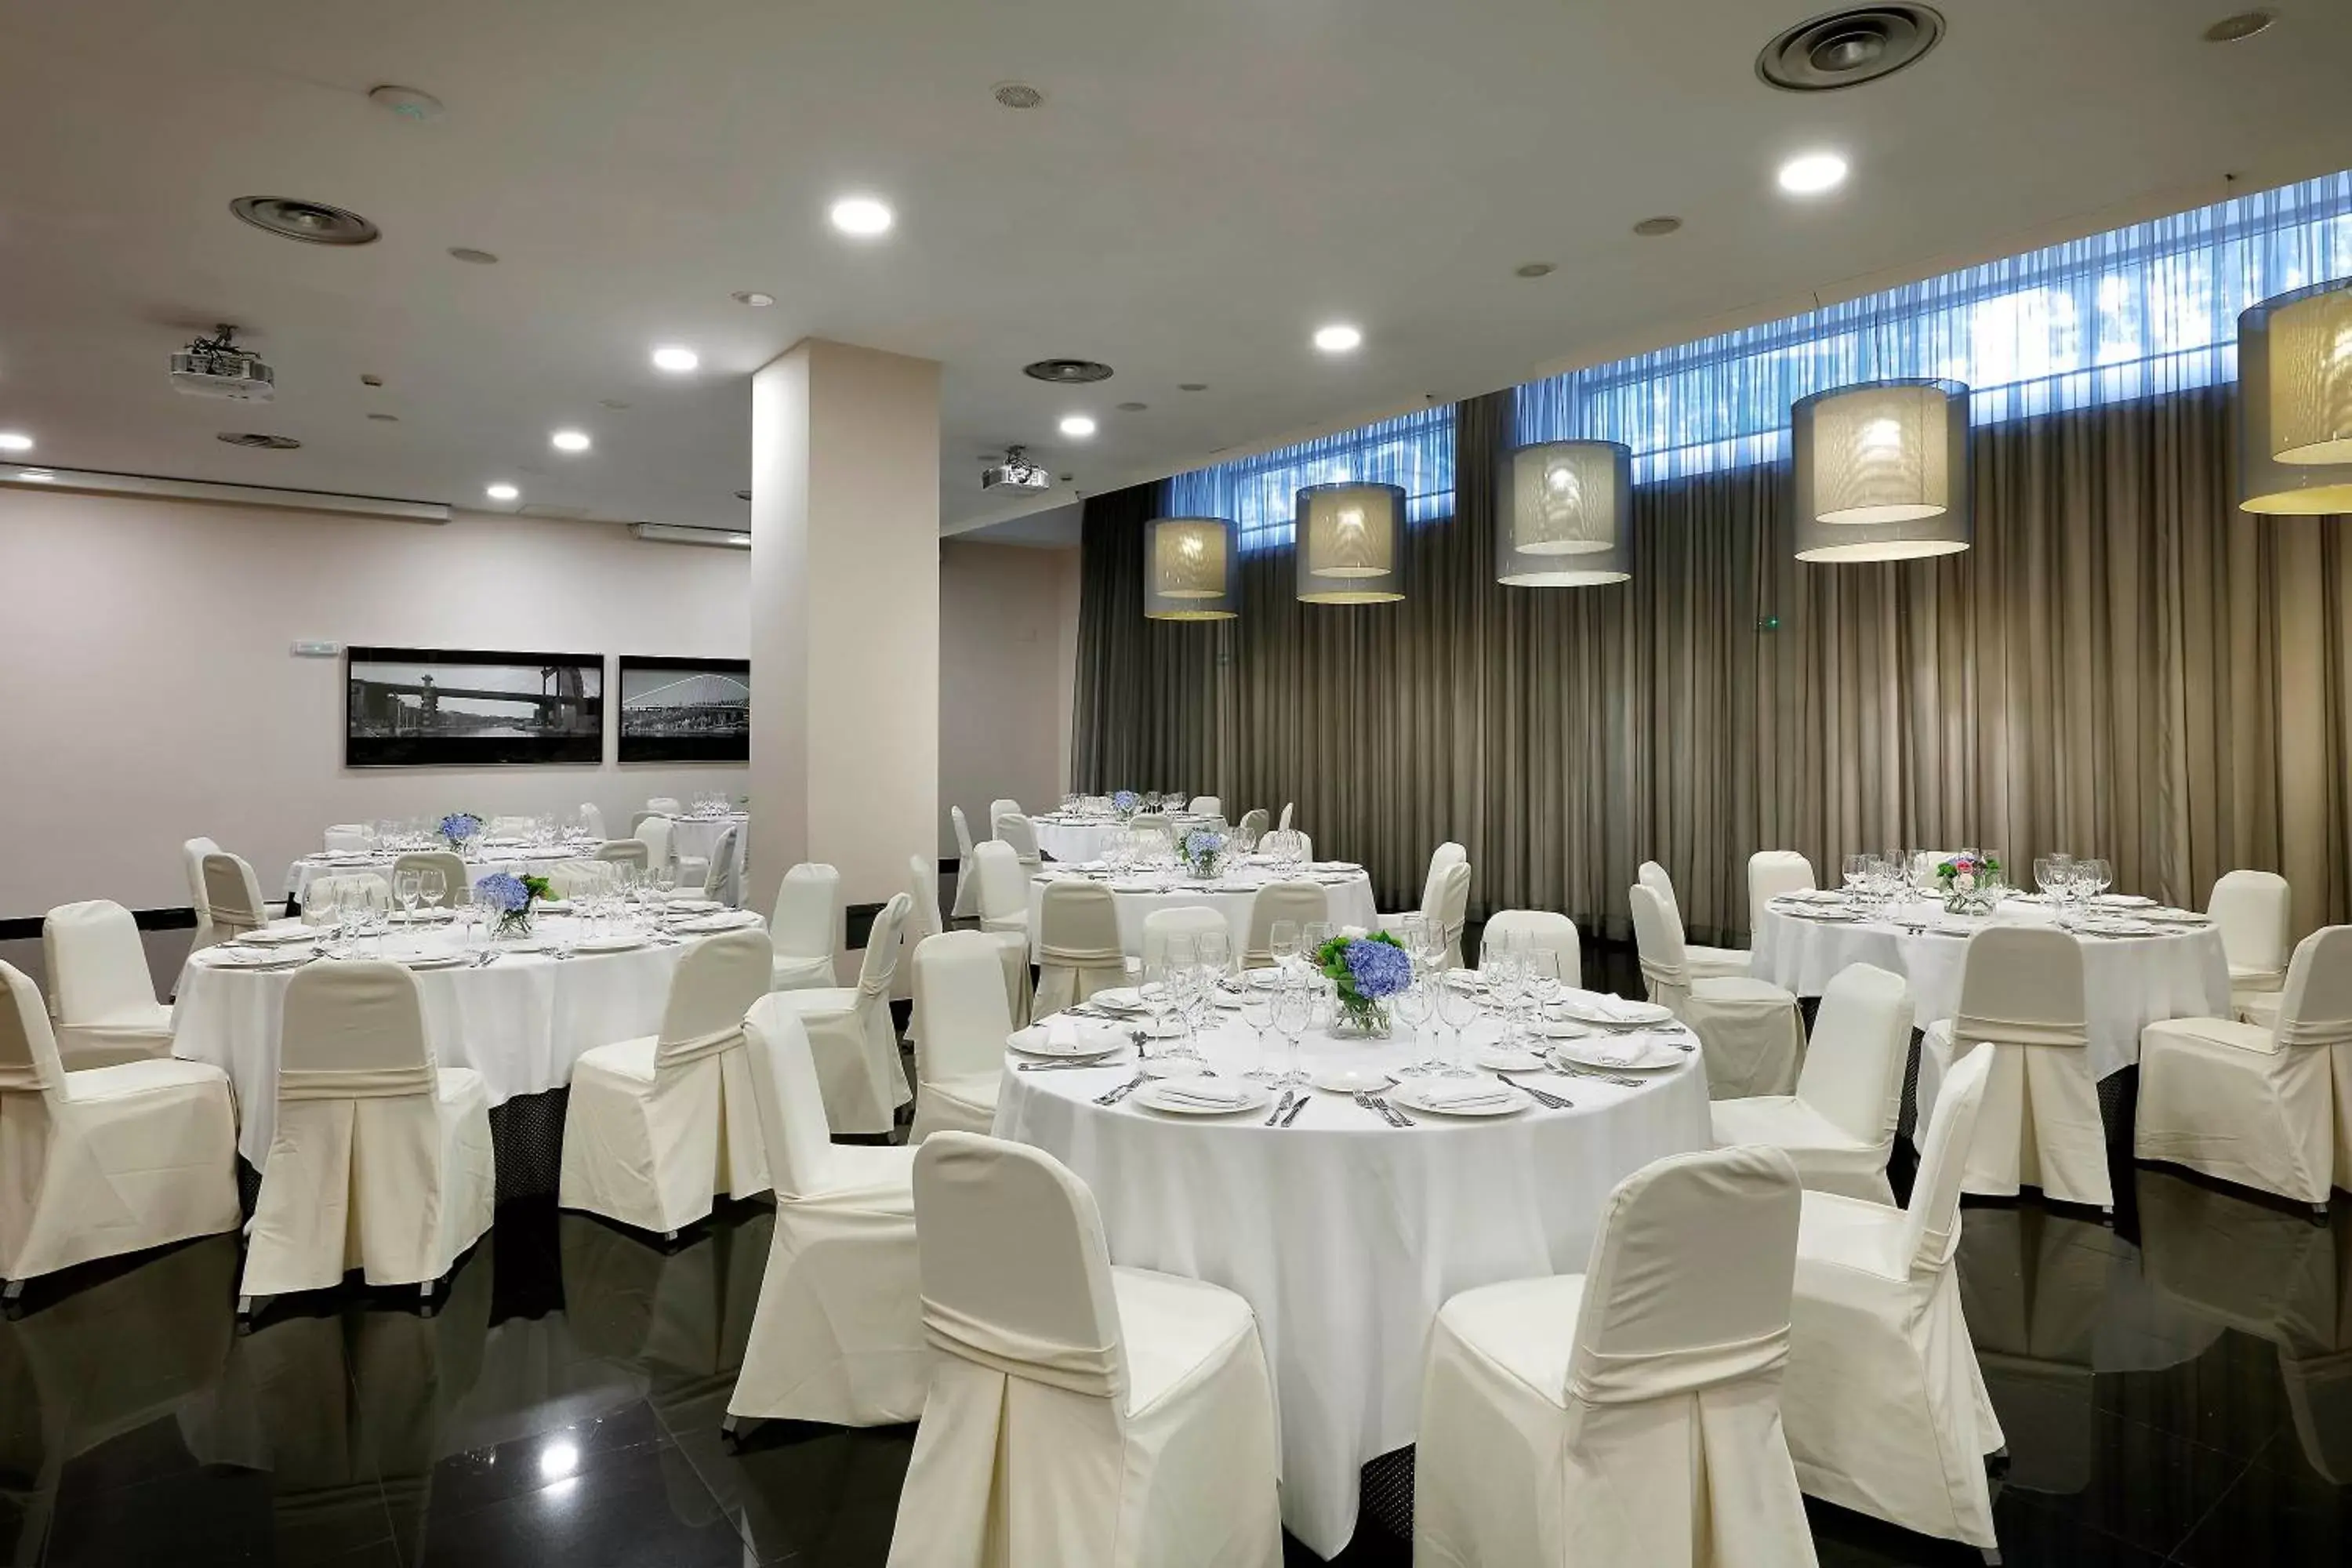 Banquet/Function facilities, Banquet Facilities in Hesperia Bilbao